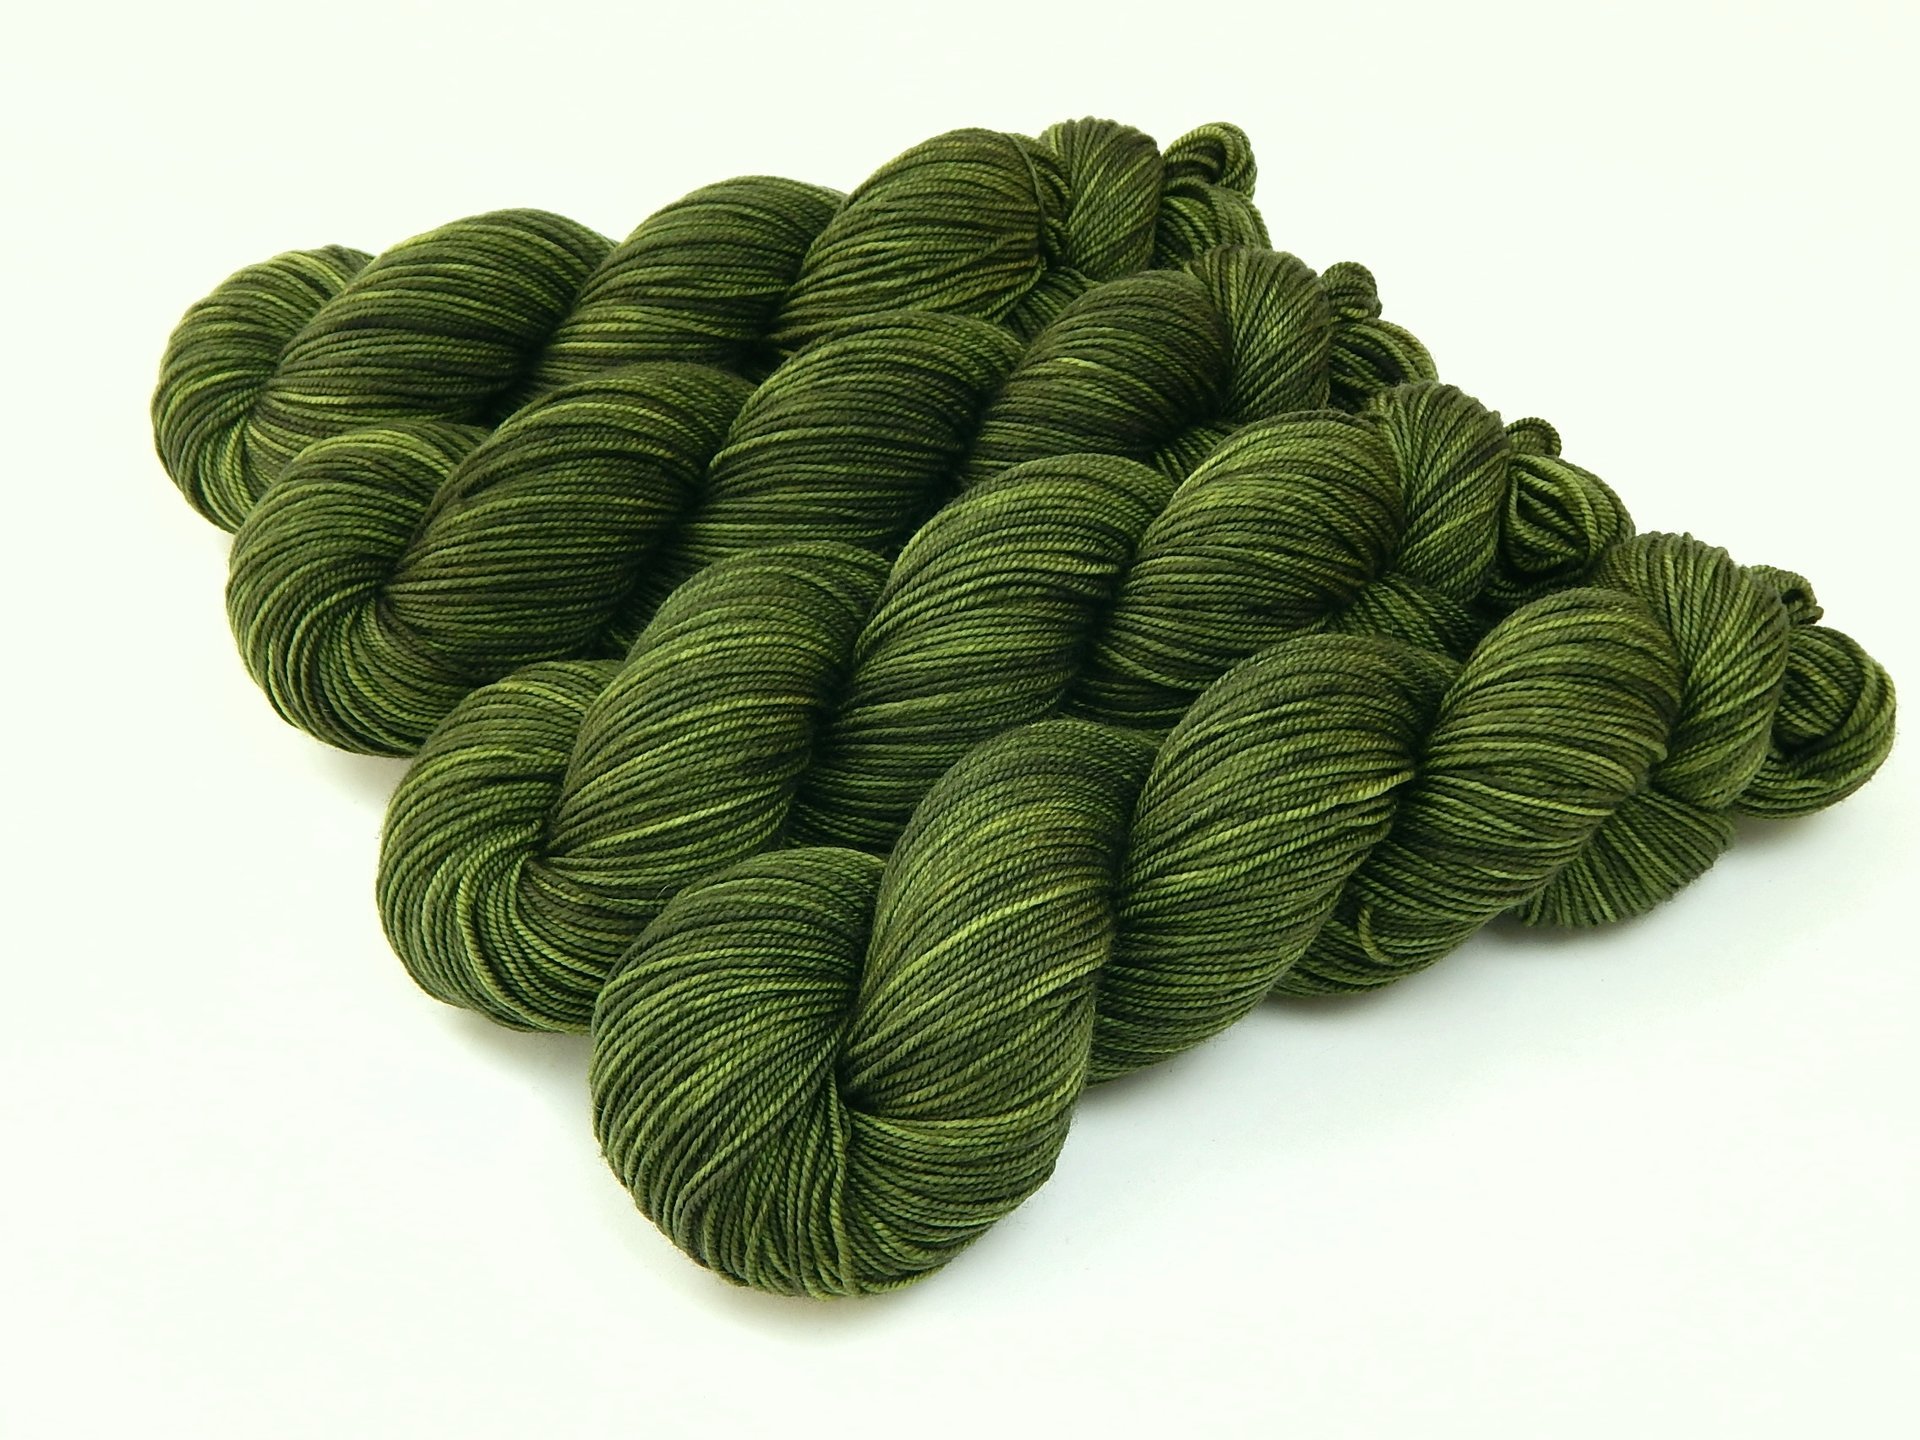 Hand Dyed Yarn, Sport Weight Superwash Merino Wool - Moss Tonal - Olive Green Indie Dyer Knitting Yarn, Semi Solid Kettle Dyed Sock Yarn